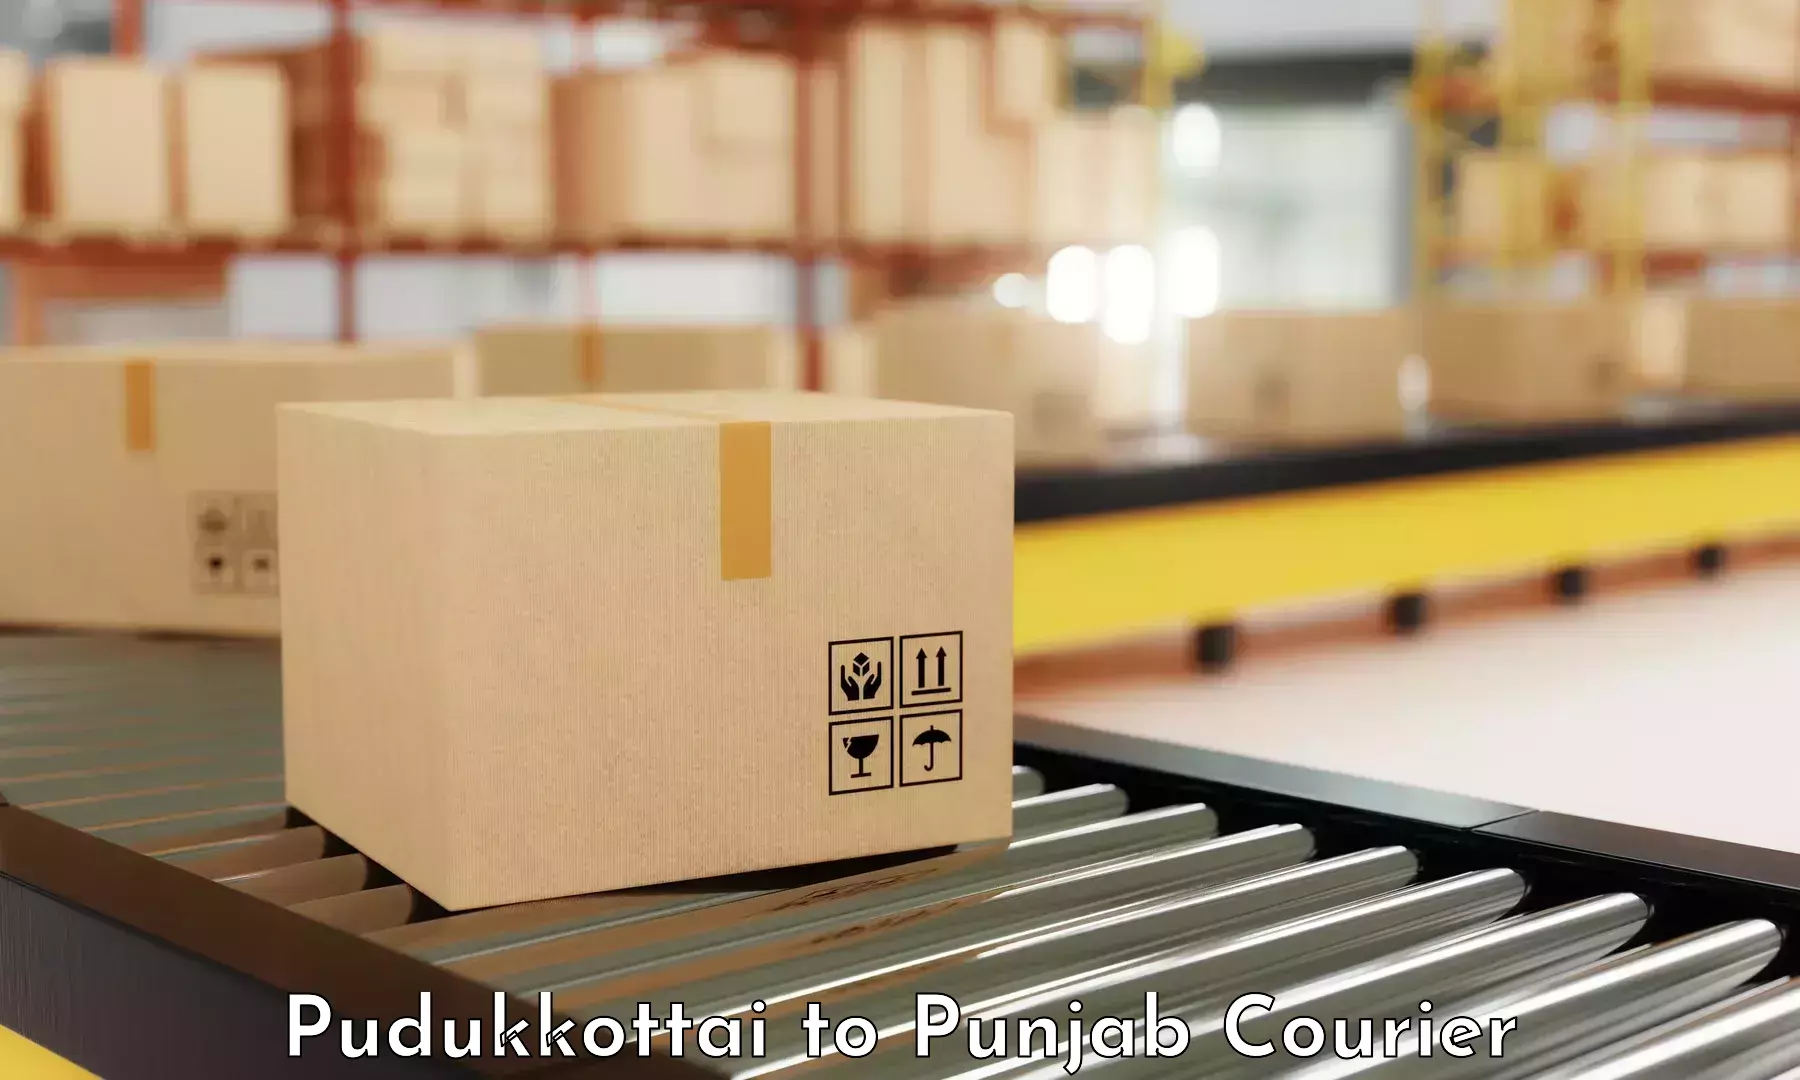 Nationwide delivery network Pudukkottai to Muktsar